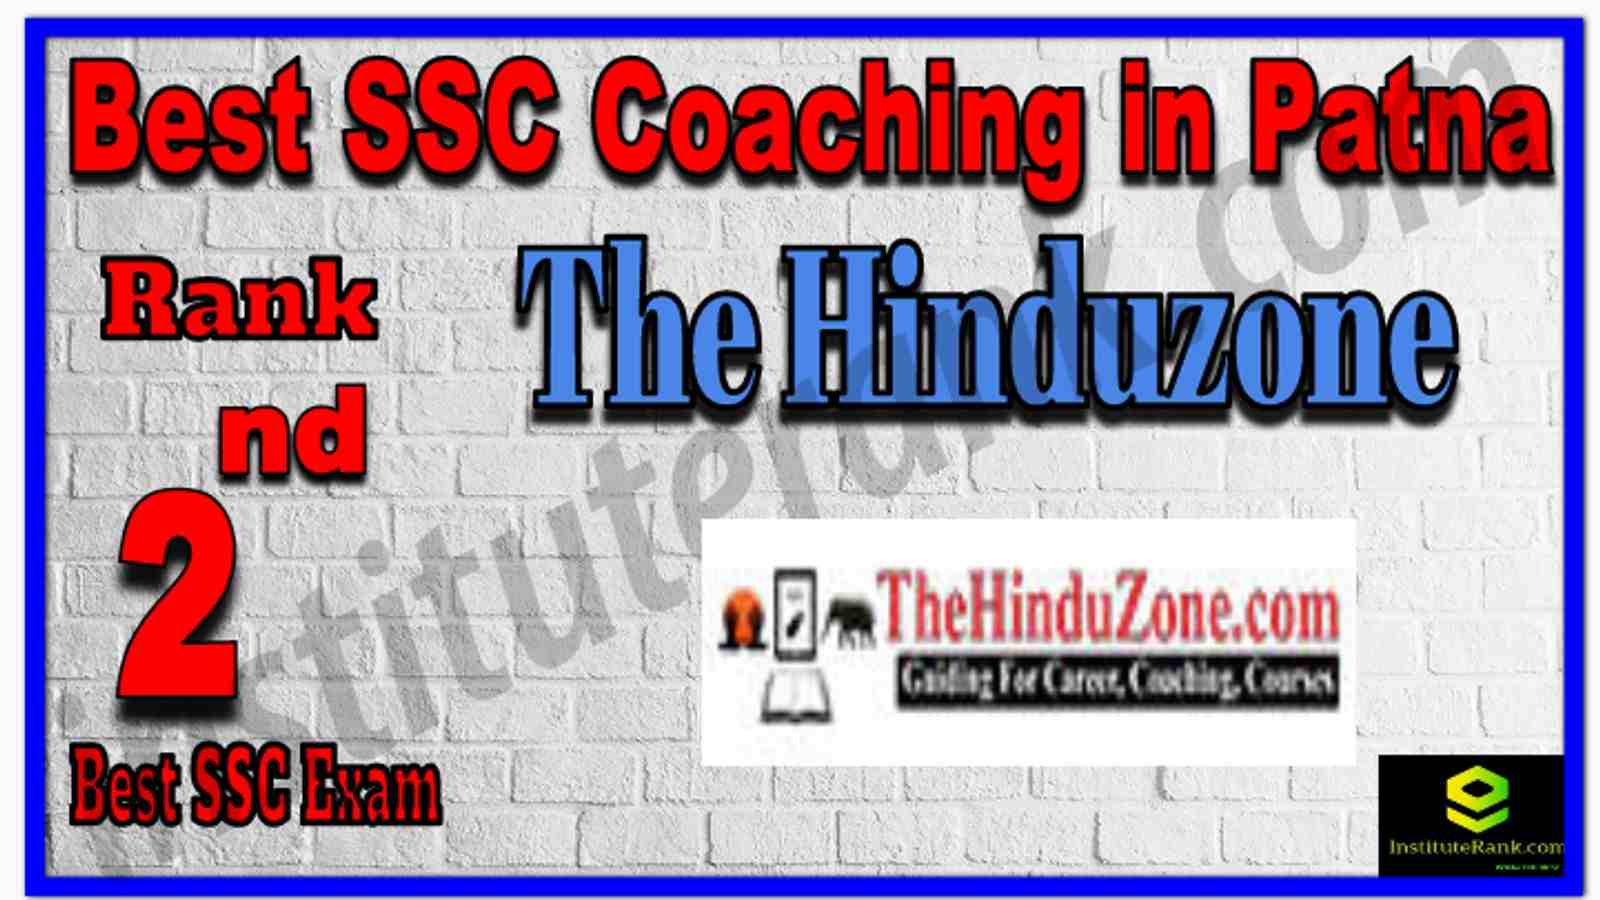 Rank 2nd Best SSC Coaching in Patna